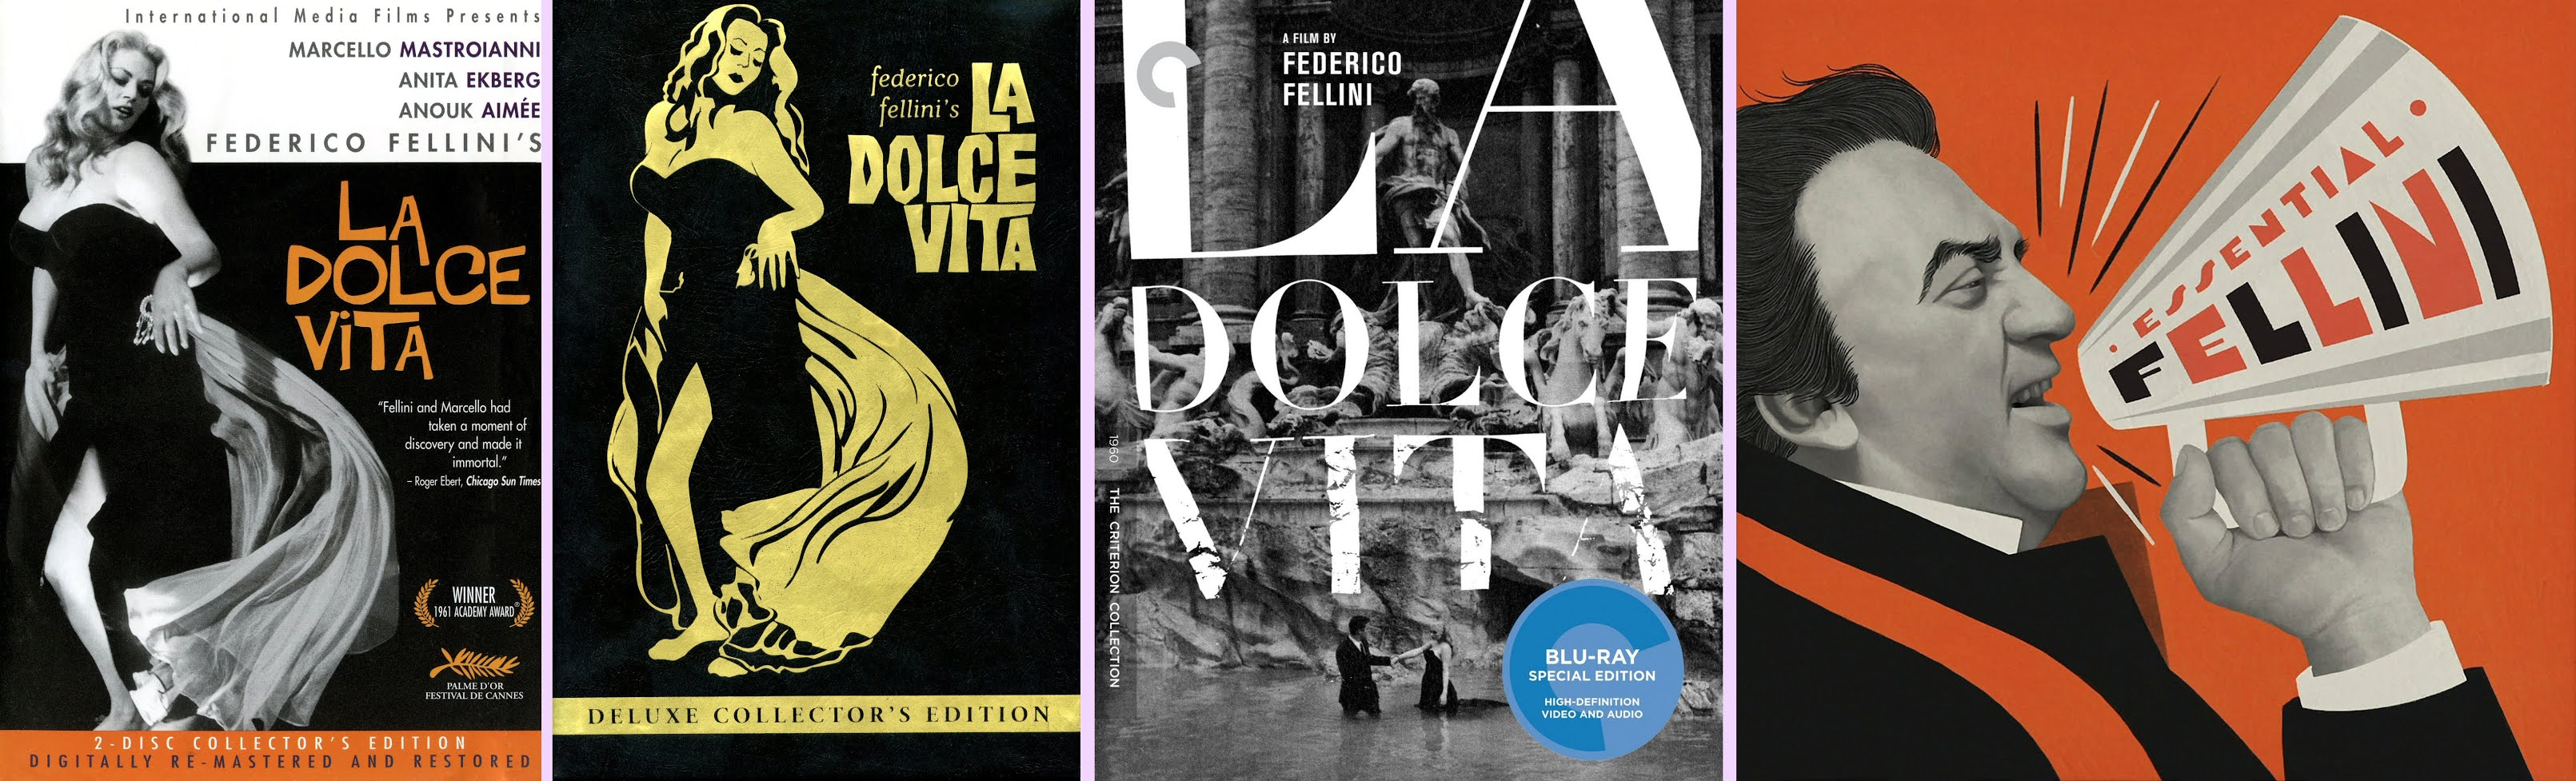 DVD Exotica: Fellini Week, Day 1: La Dolce Vita